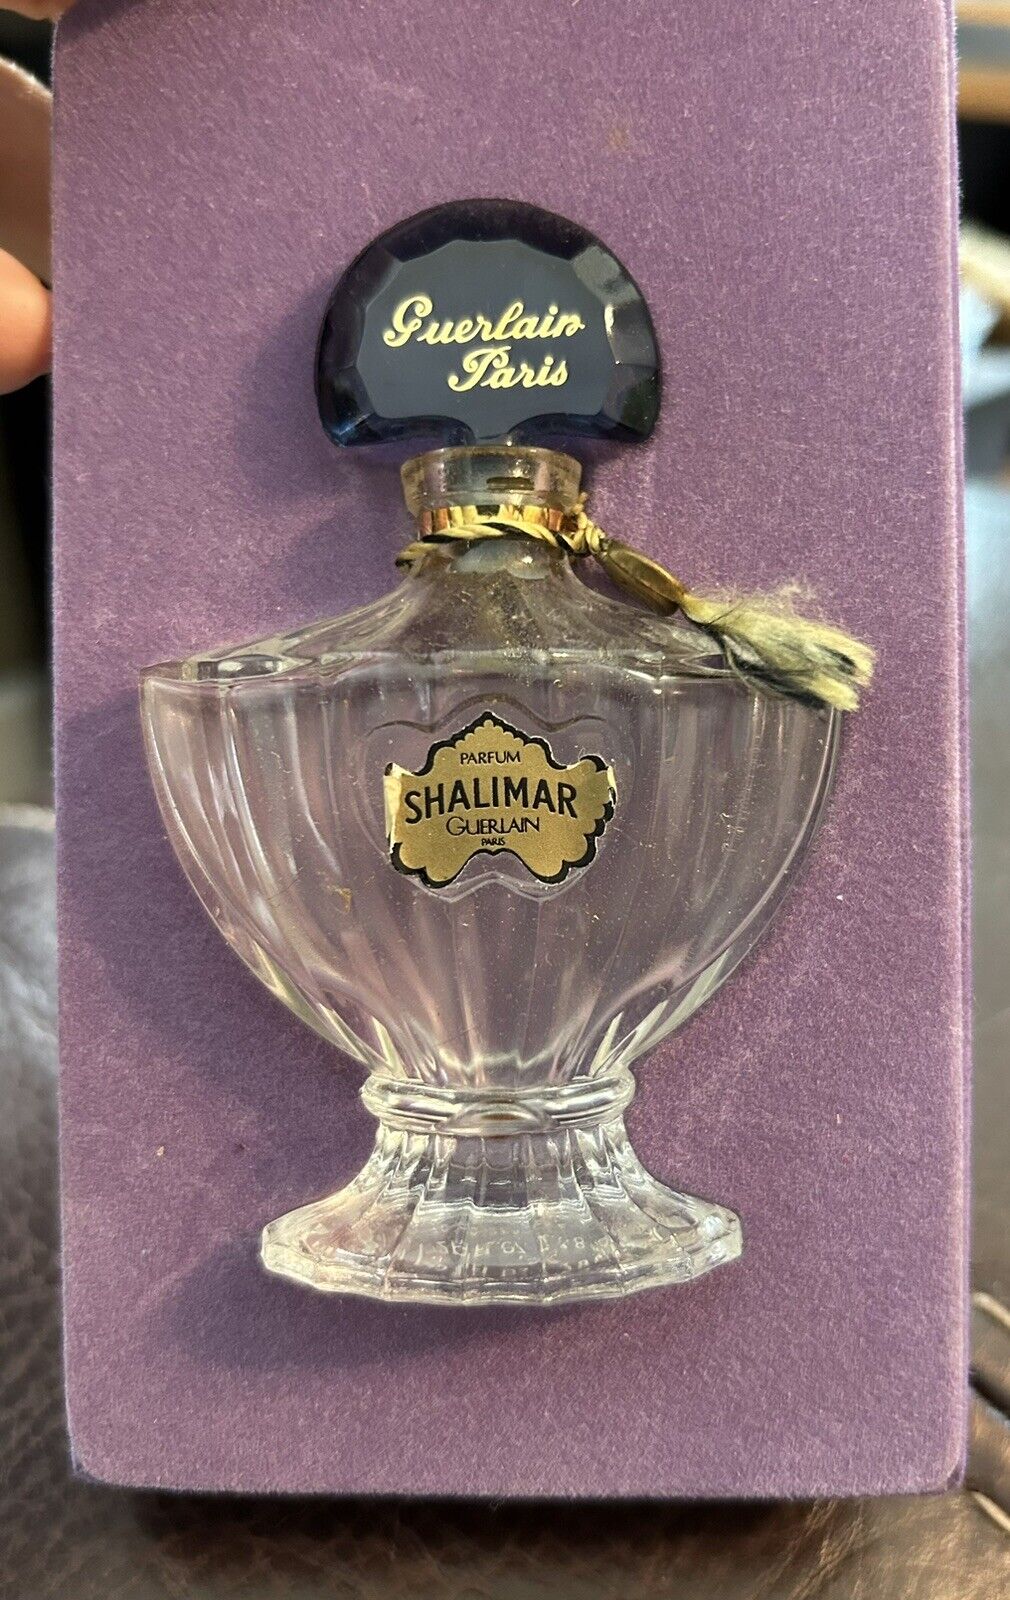 VTG Guerlain Shalimar Glass Perfume Bottle France EMPTY Baccarat Crystal? w/ Box